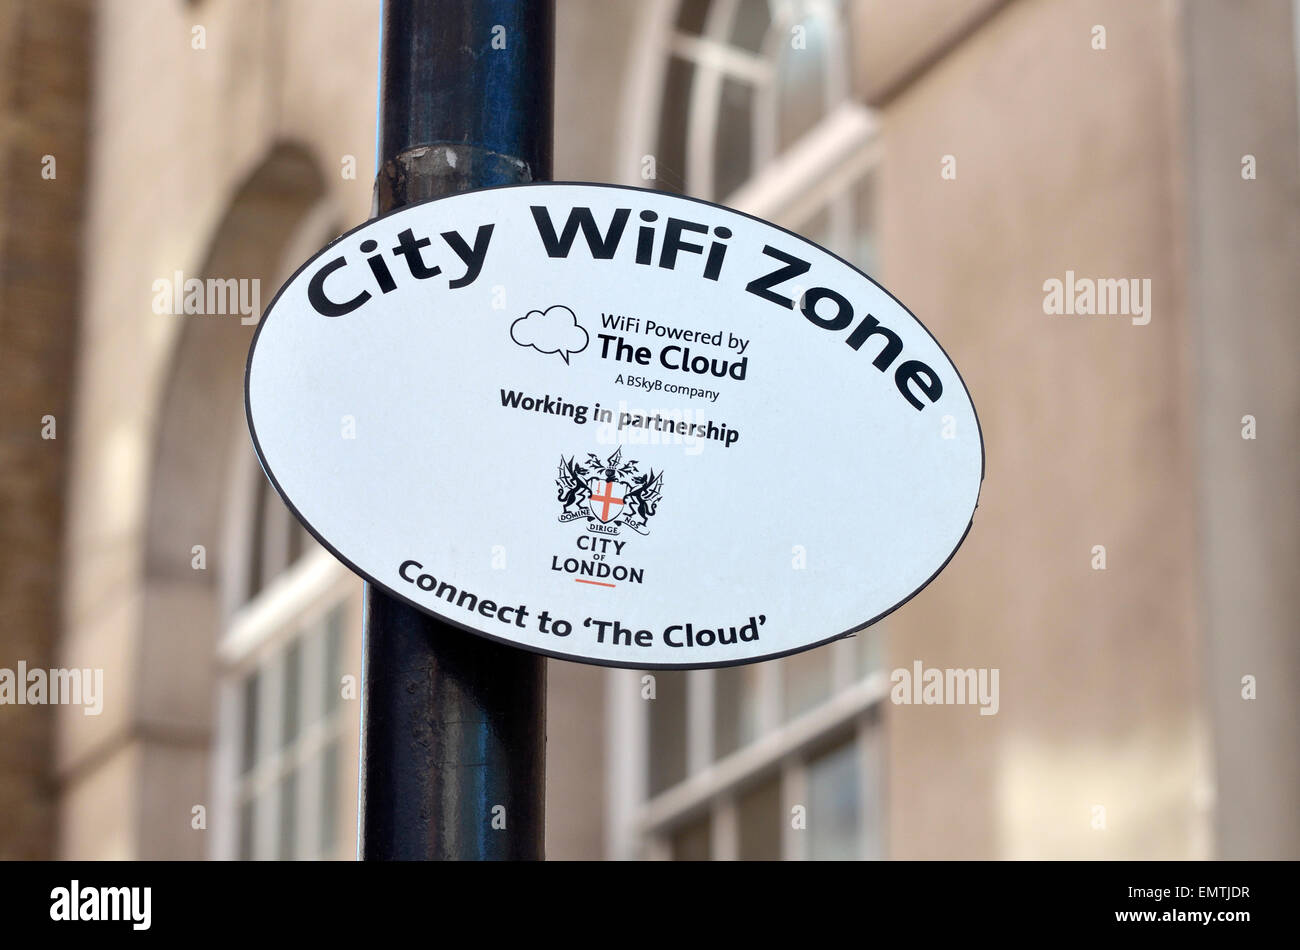 London, England, UK. City WiFi zone sign Stock Photo